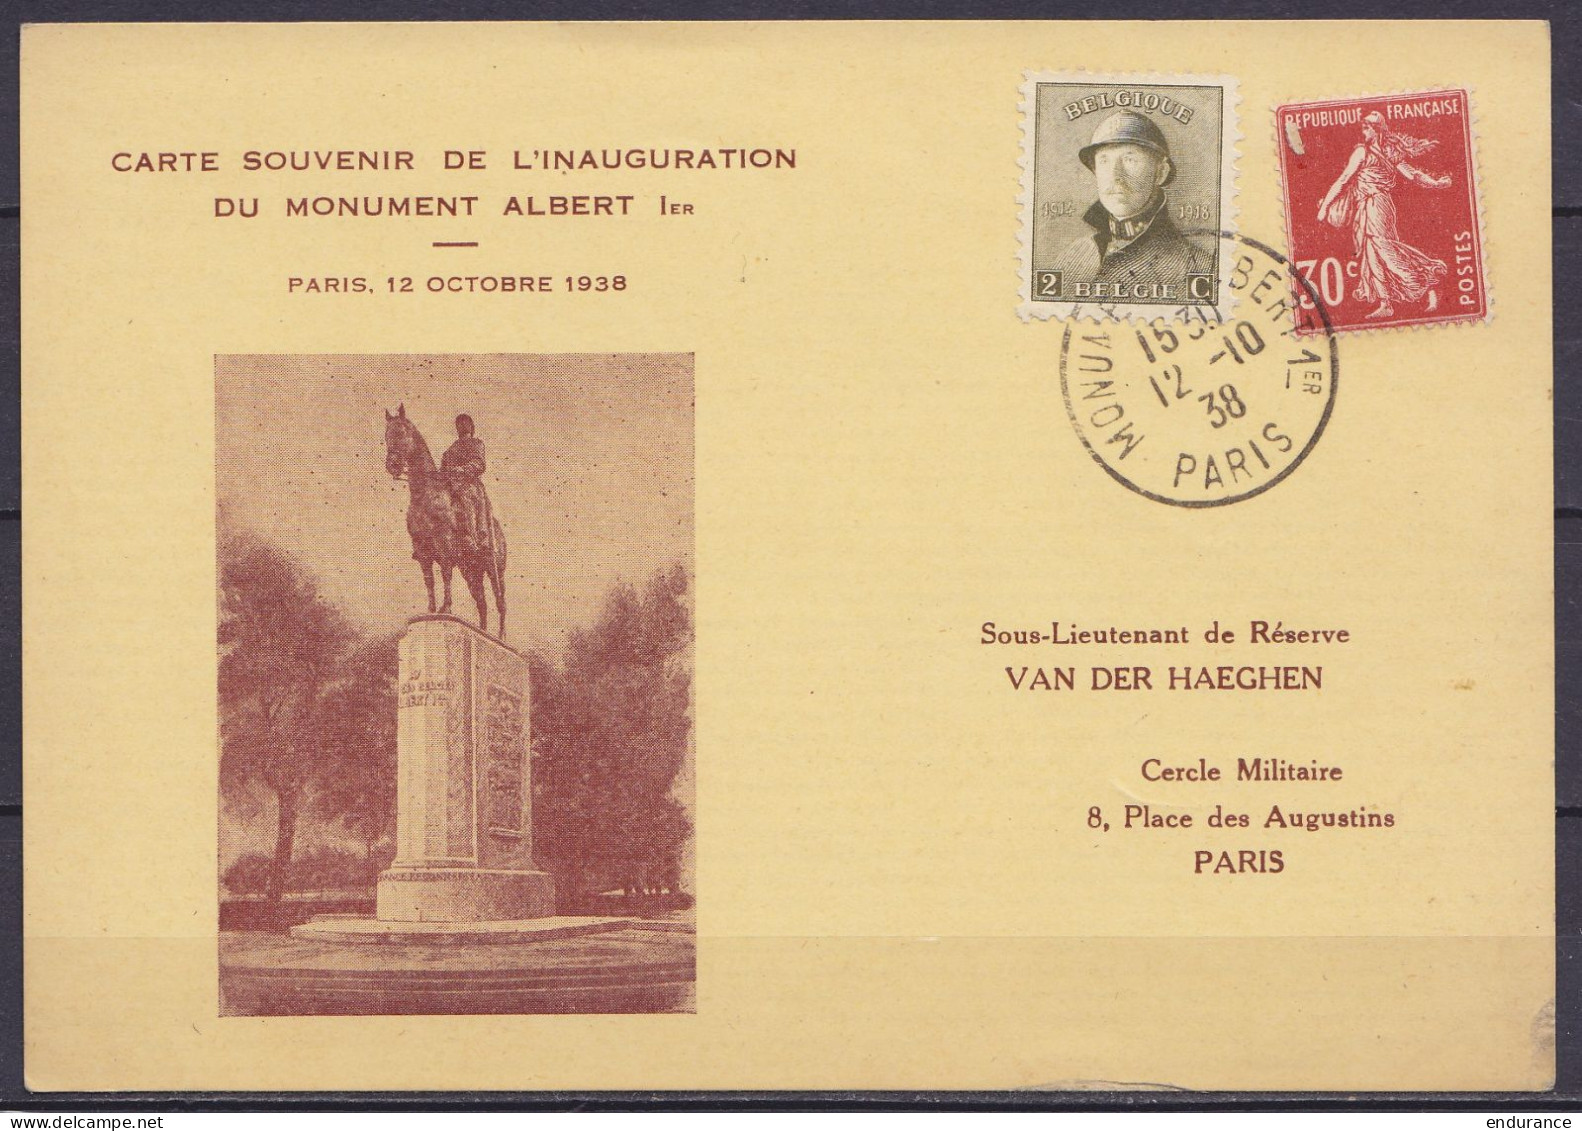 Carte Souvenir De L'inauguration Du Monument Albert 1e Affr. N°166 + Semeuse 30c Càd "MONUMENT ALBERT 1e /12-10-1938/ PA - 1919-1920 Albert Met Helm